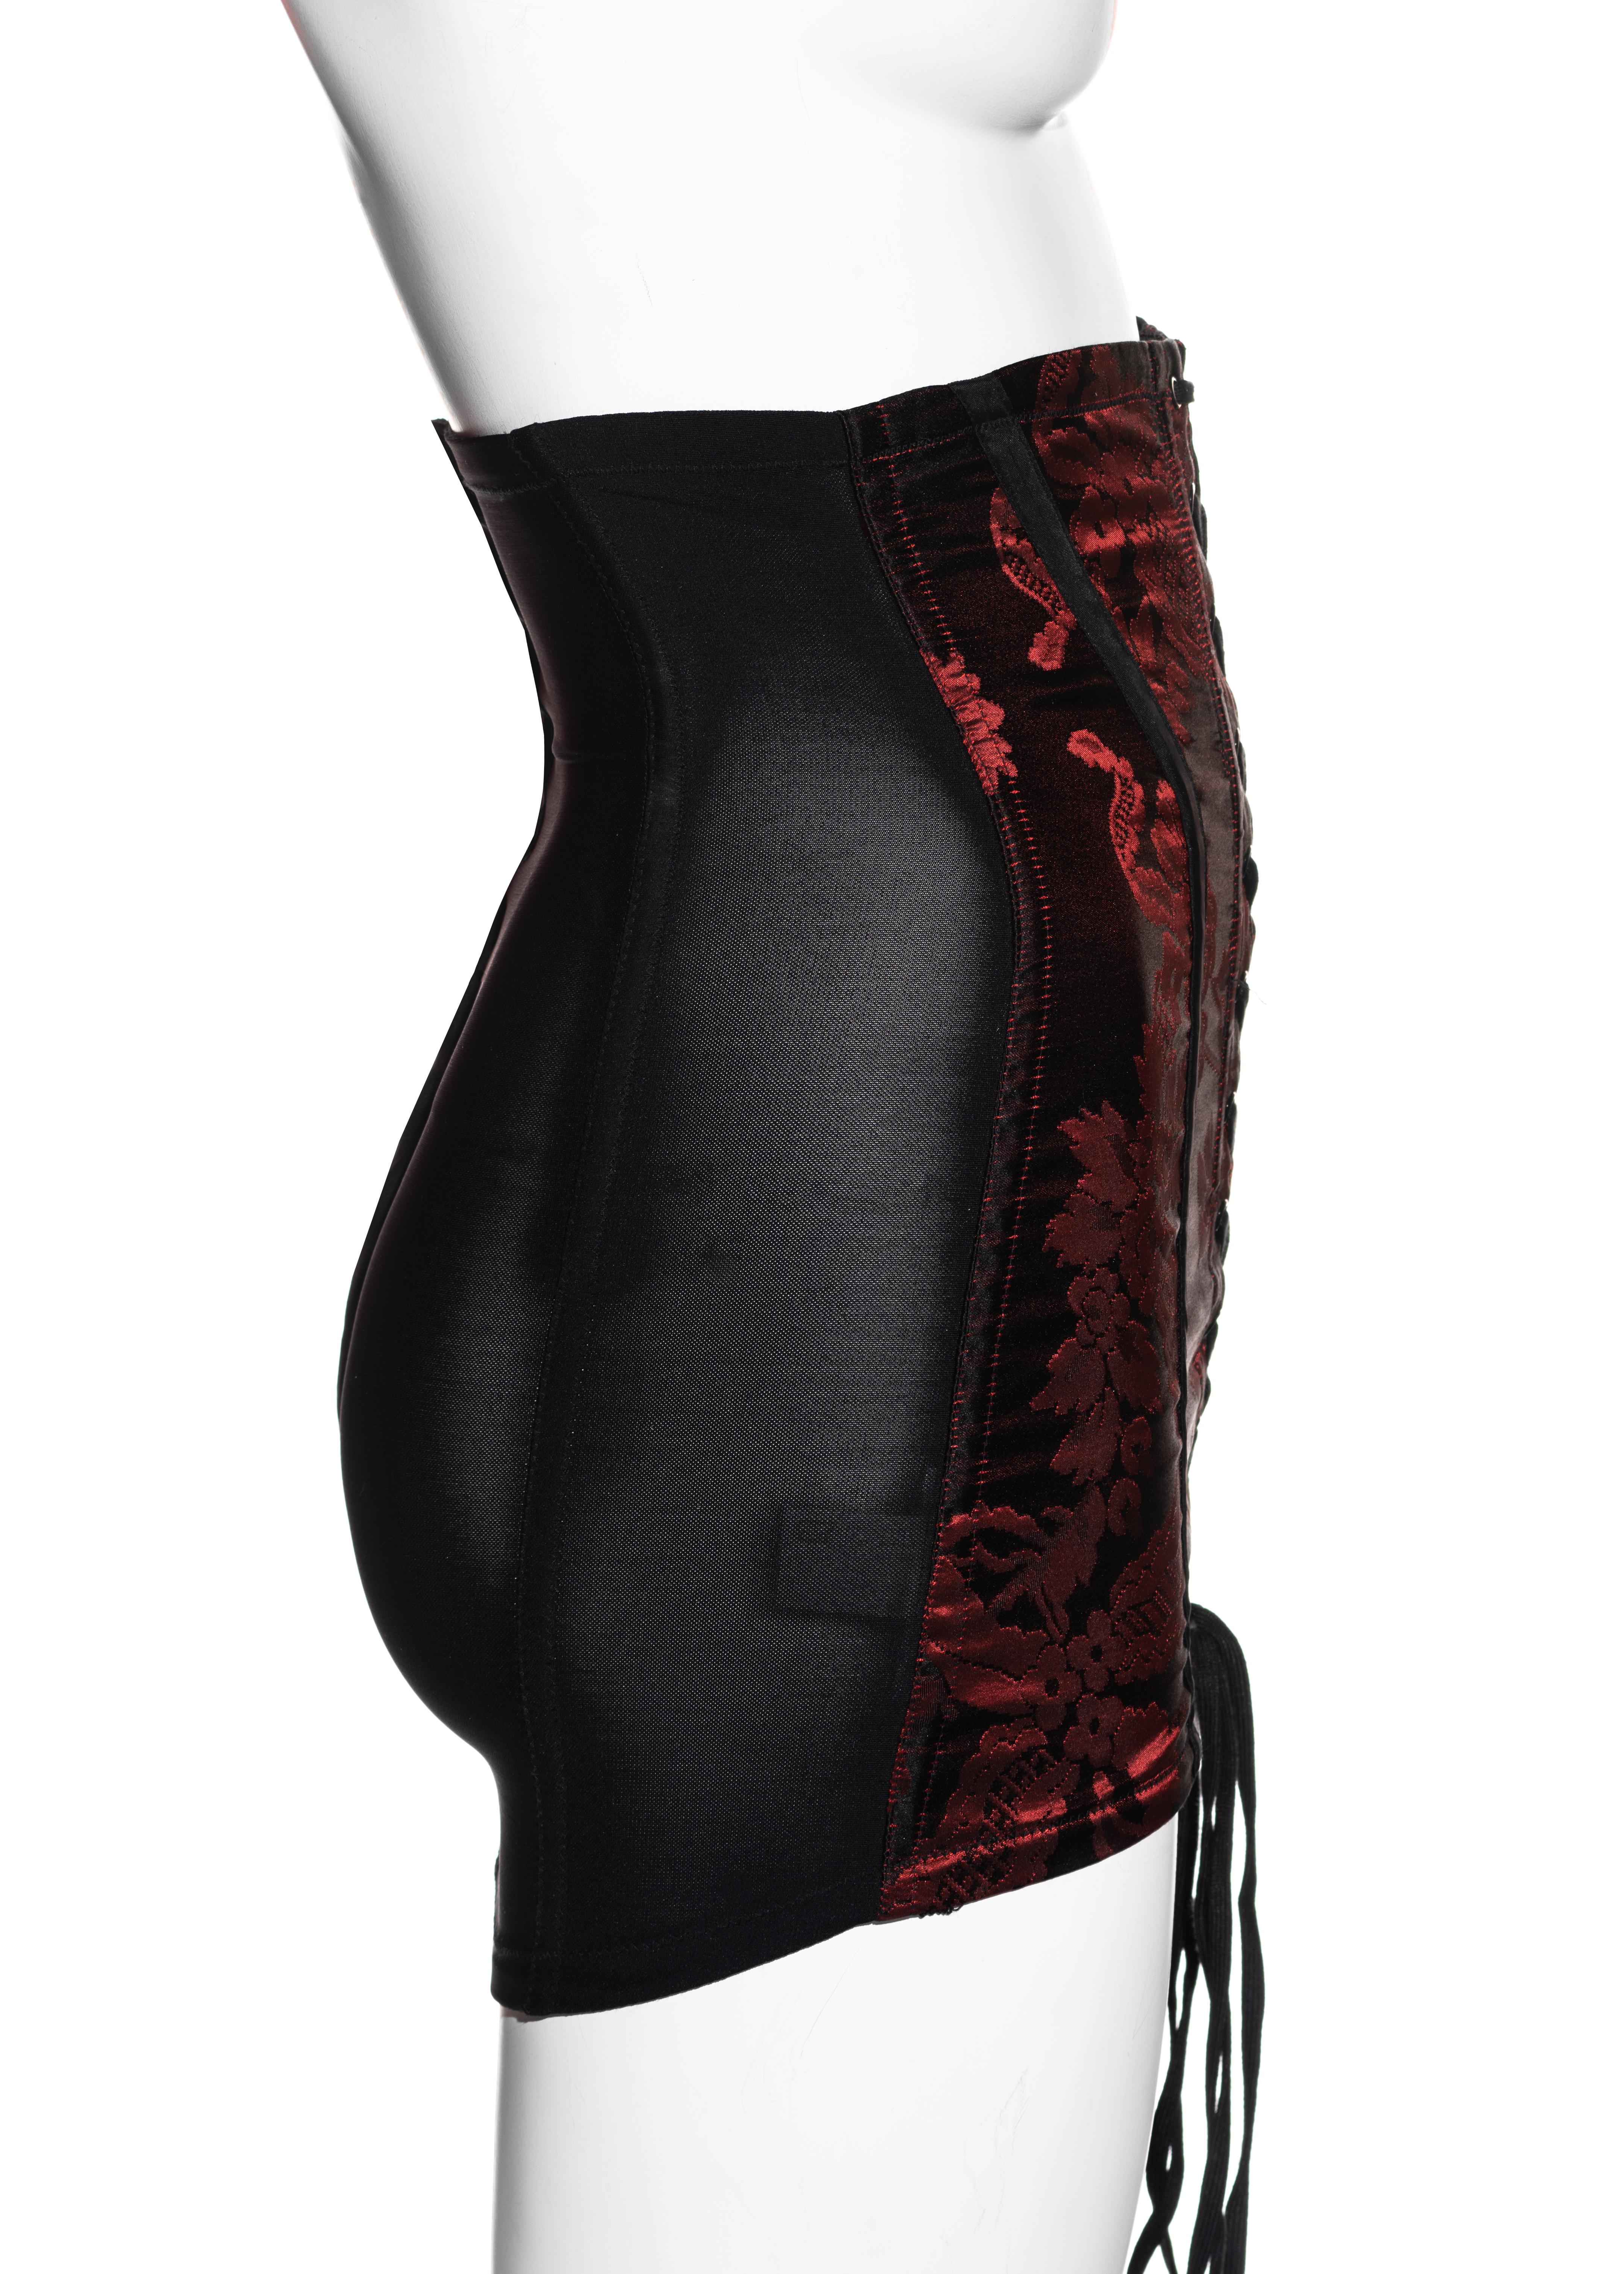 Women's Dolce & Gabbana ruby brocade corseted girdle style micro mini skirt, ss 1993